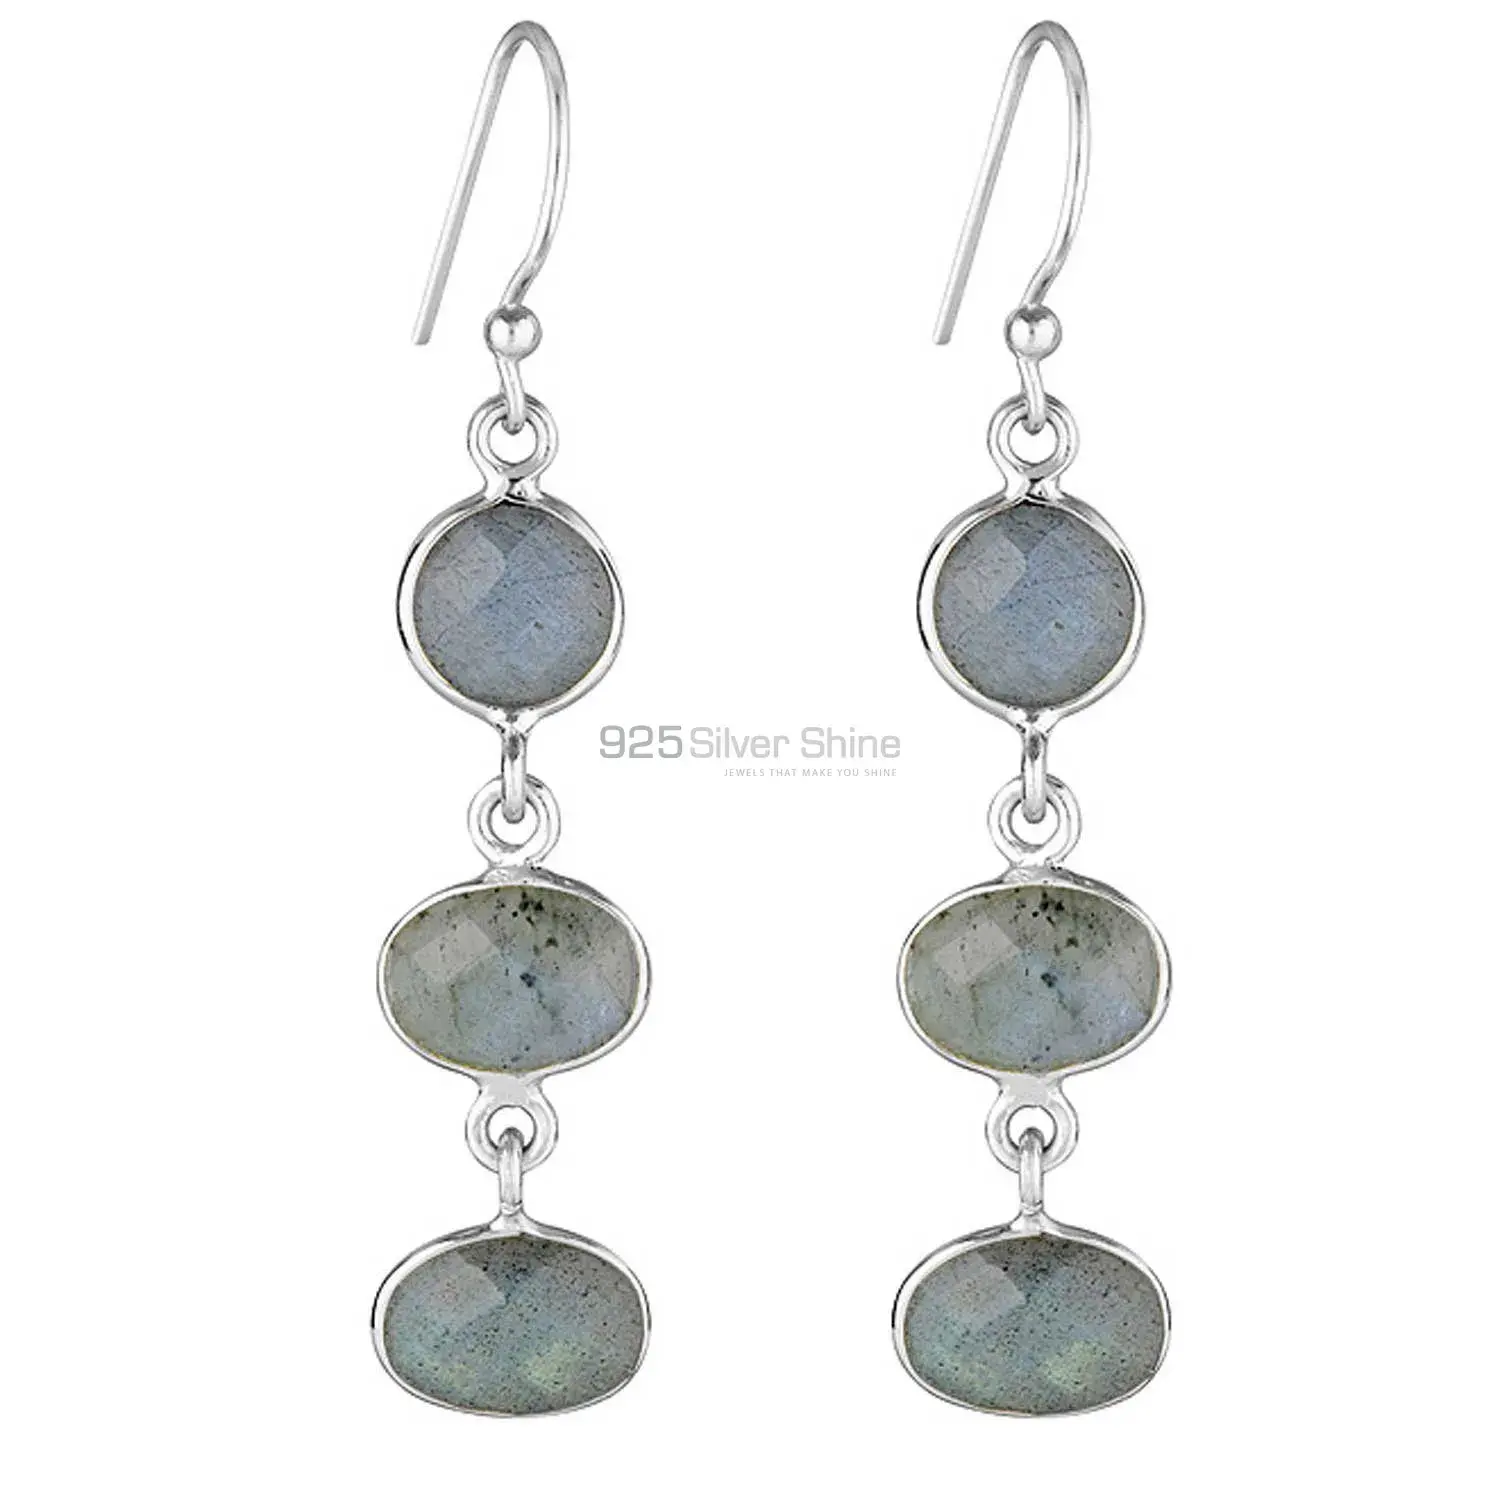 Semi Precious Labradorite Gemstone Earrings Wholesaler In 925 Sterling Silver Jewelry 925SE1868